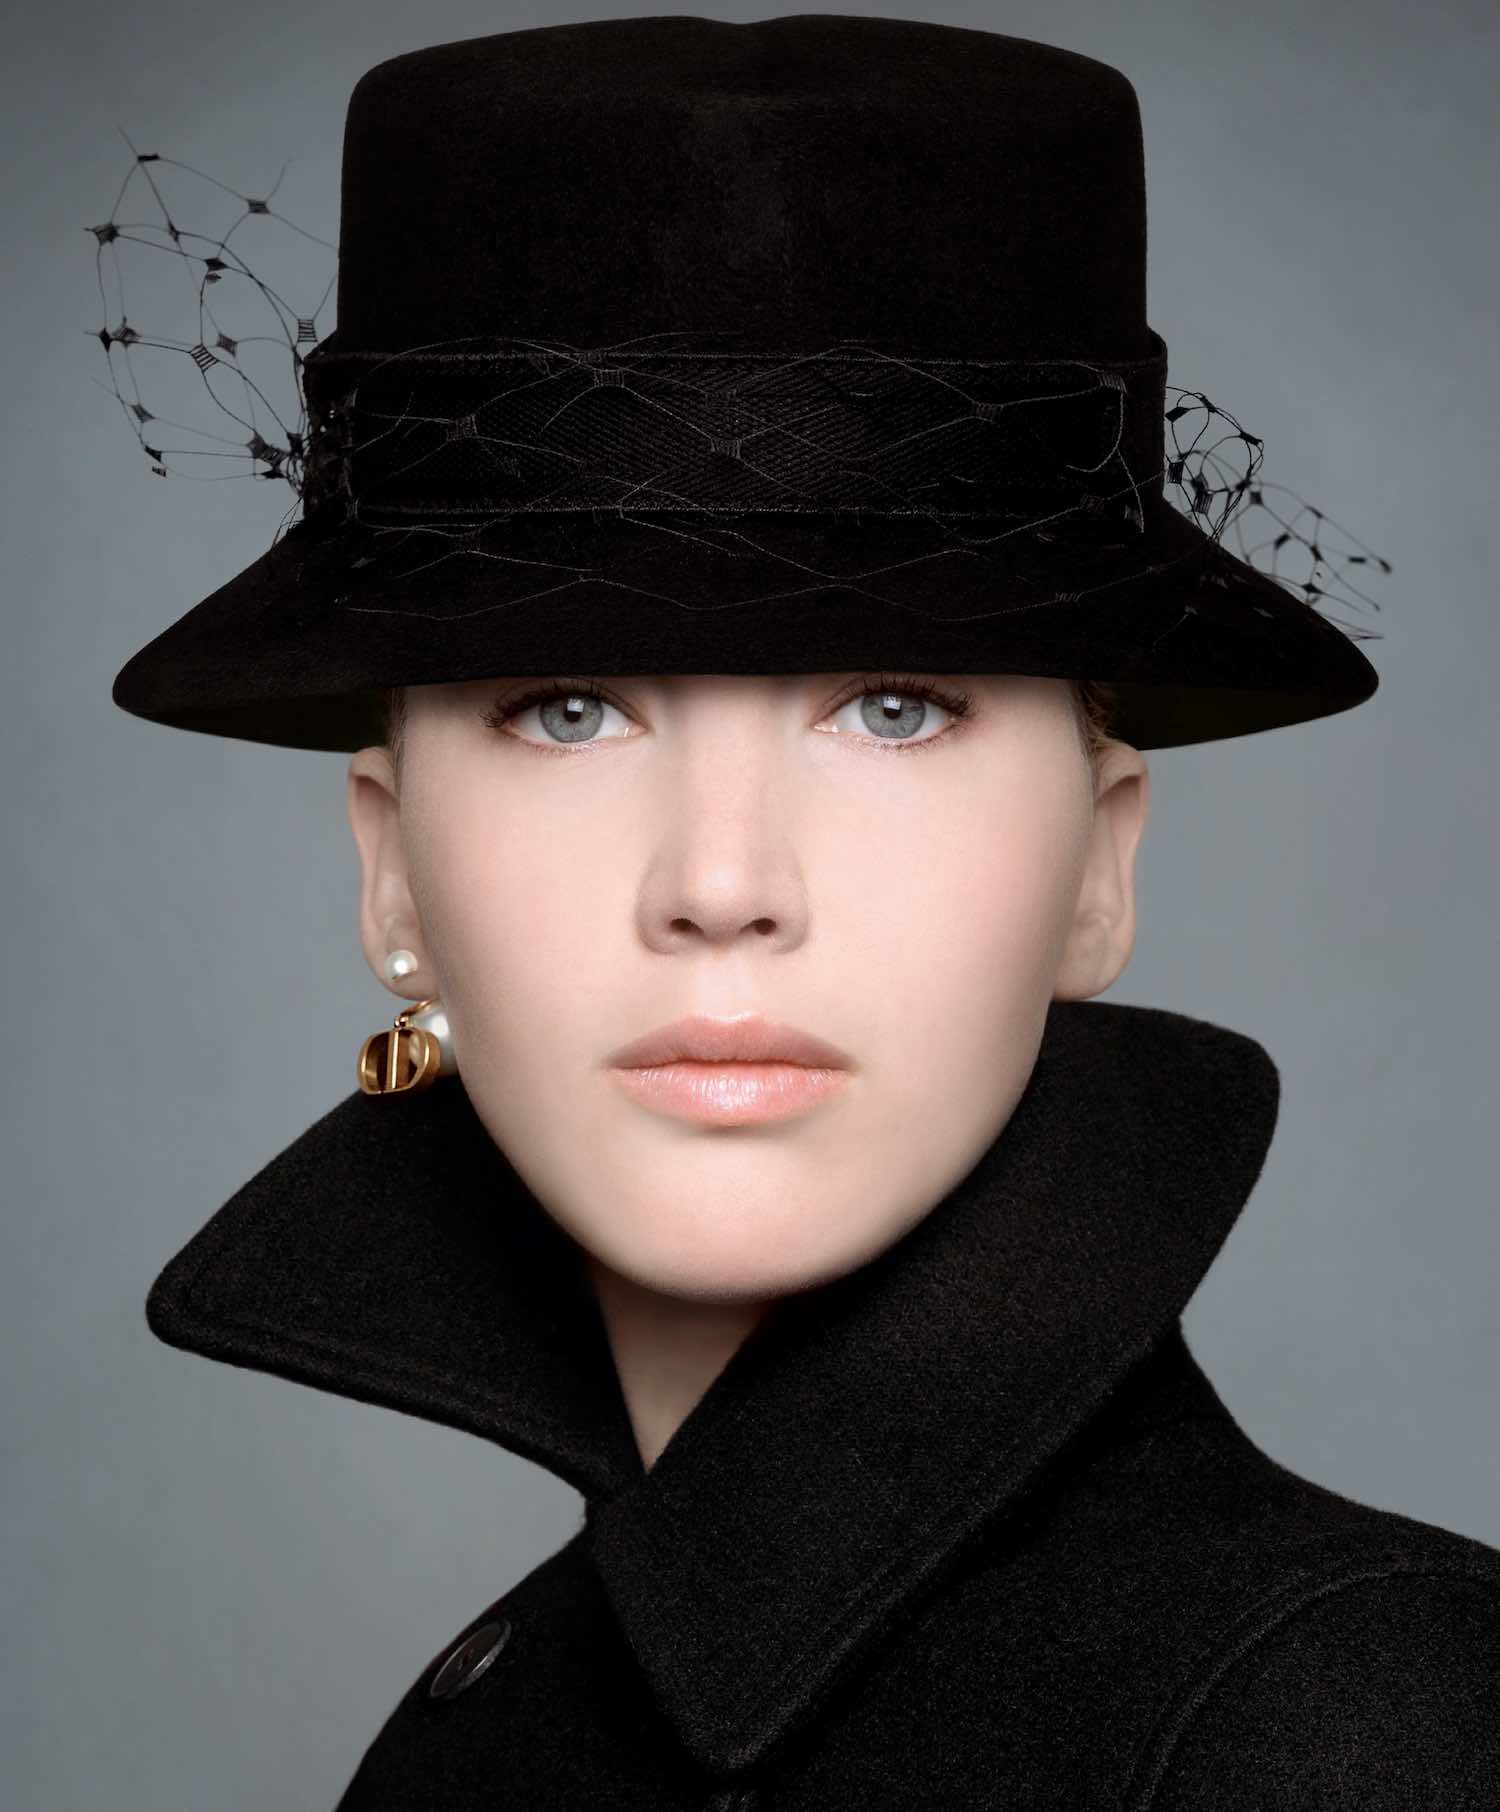 Dior Jennifer Lawrence